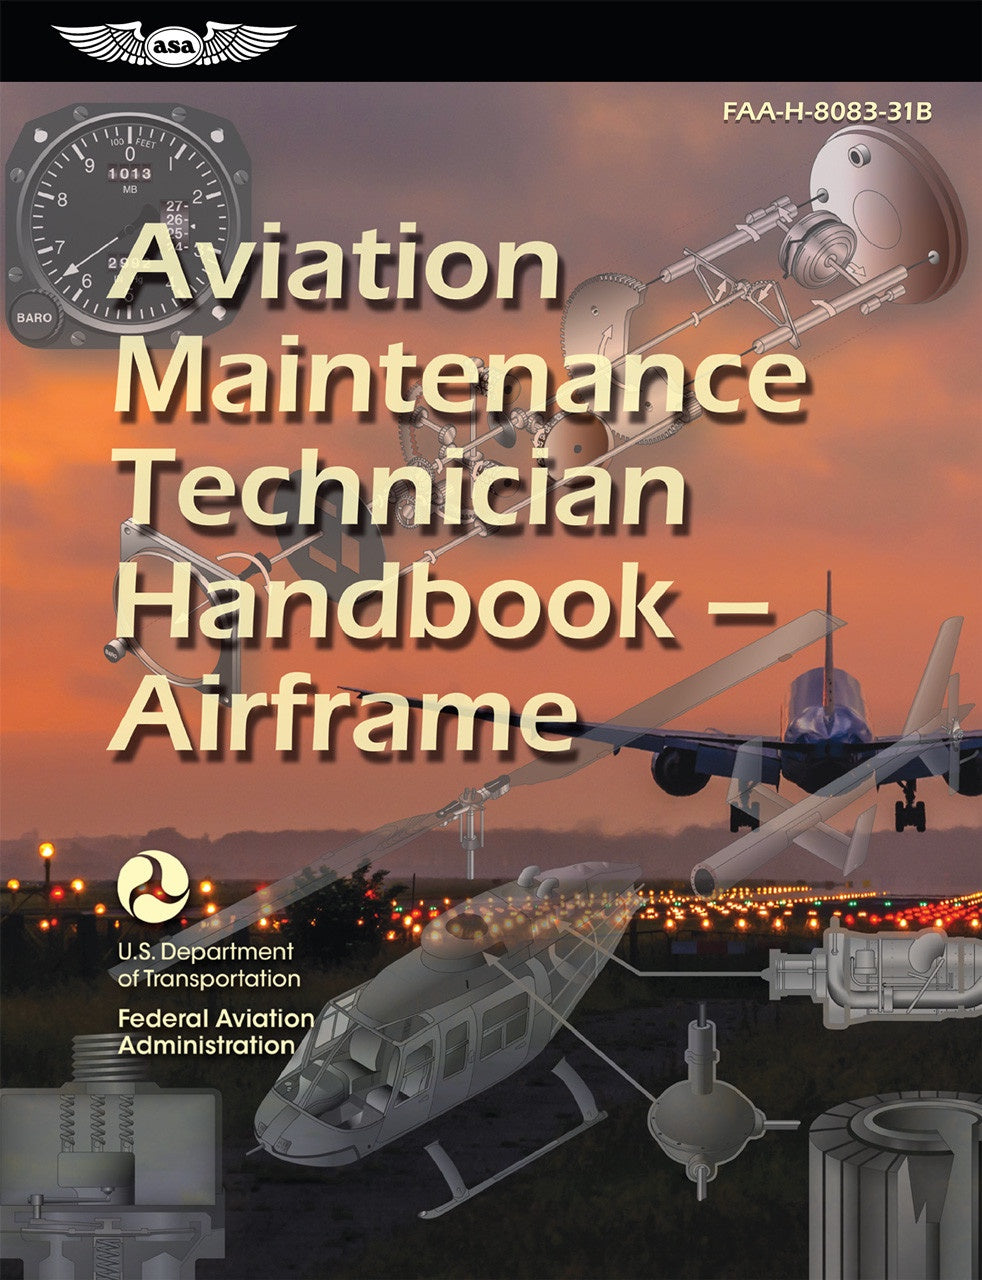 Aviation Maintenance Technician Handbook: Airframe 8083-31B